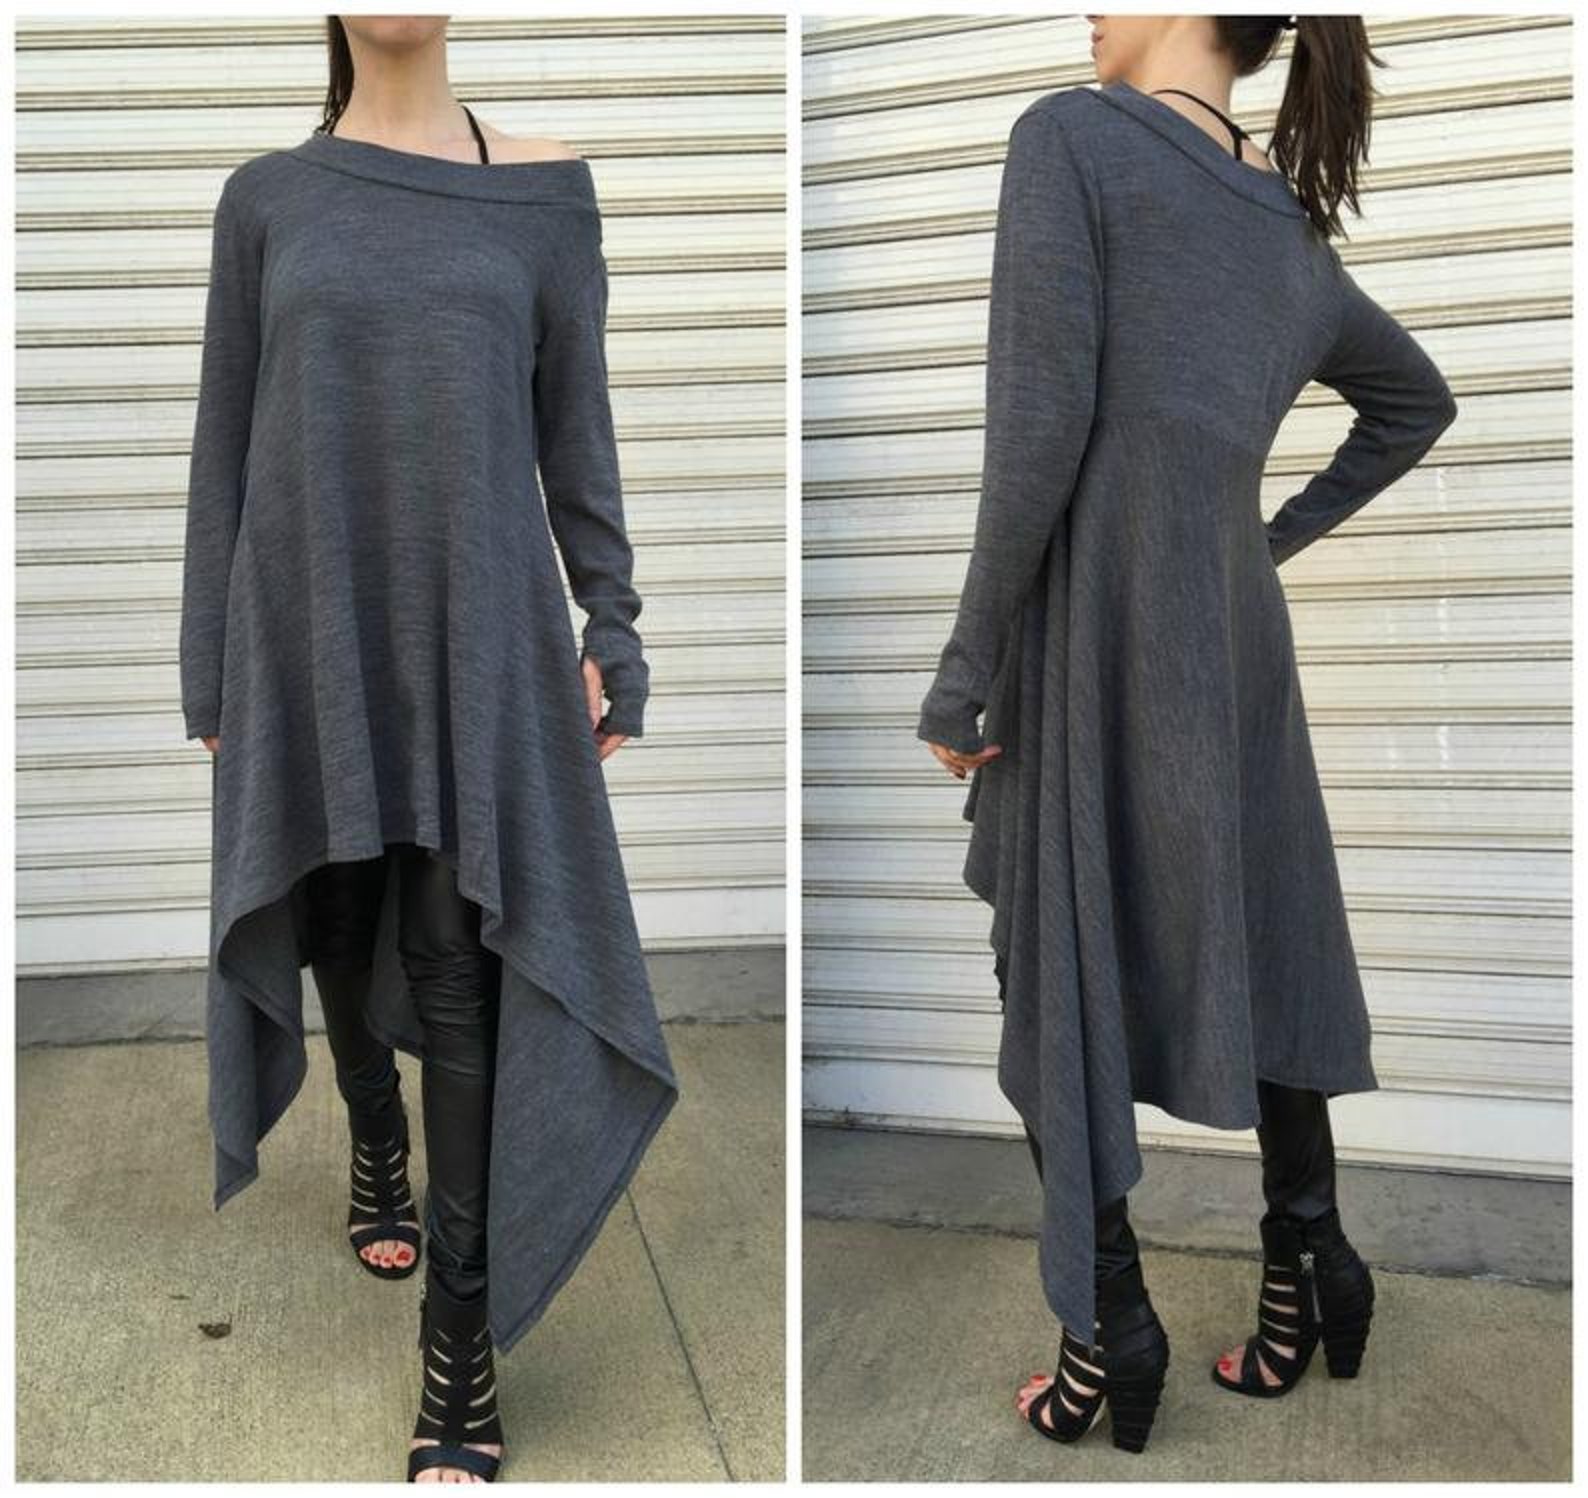 Black Asymmetrical Sweater Top / Oversize Sweater Dress / Long | Etsy